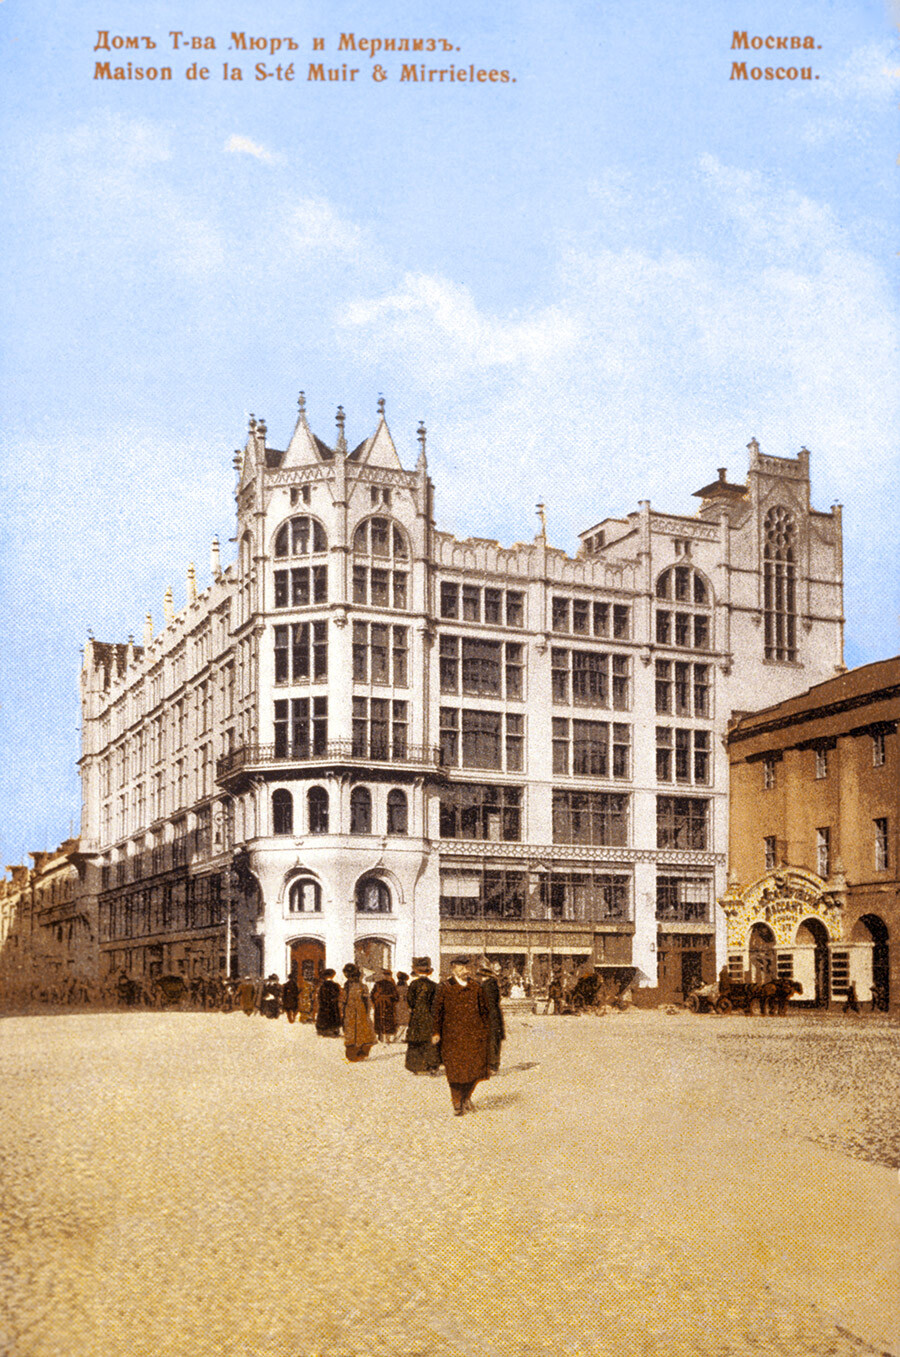 'Muir & Mirrielees' department store gothic building